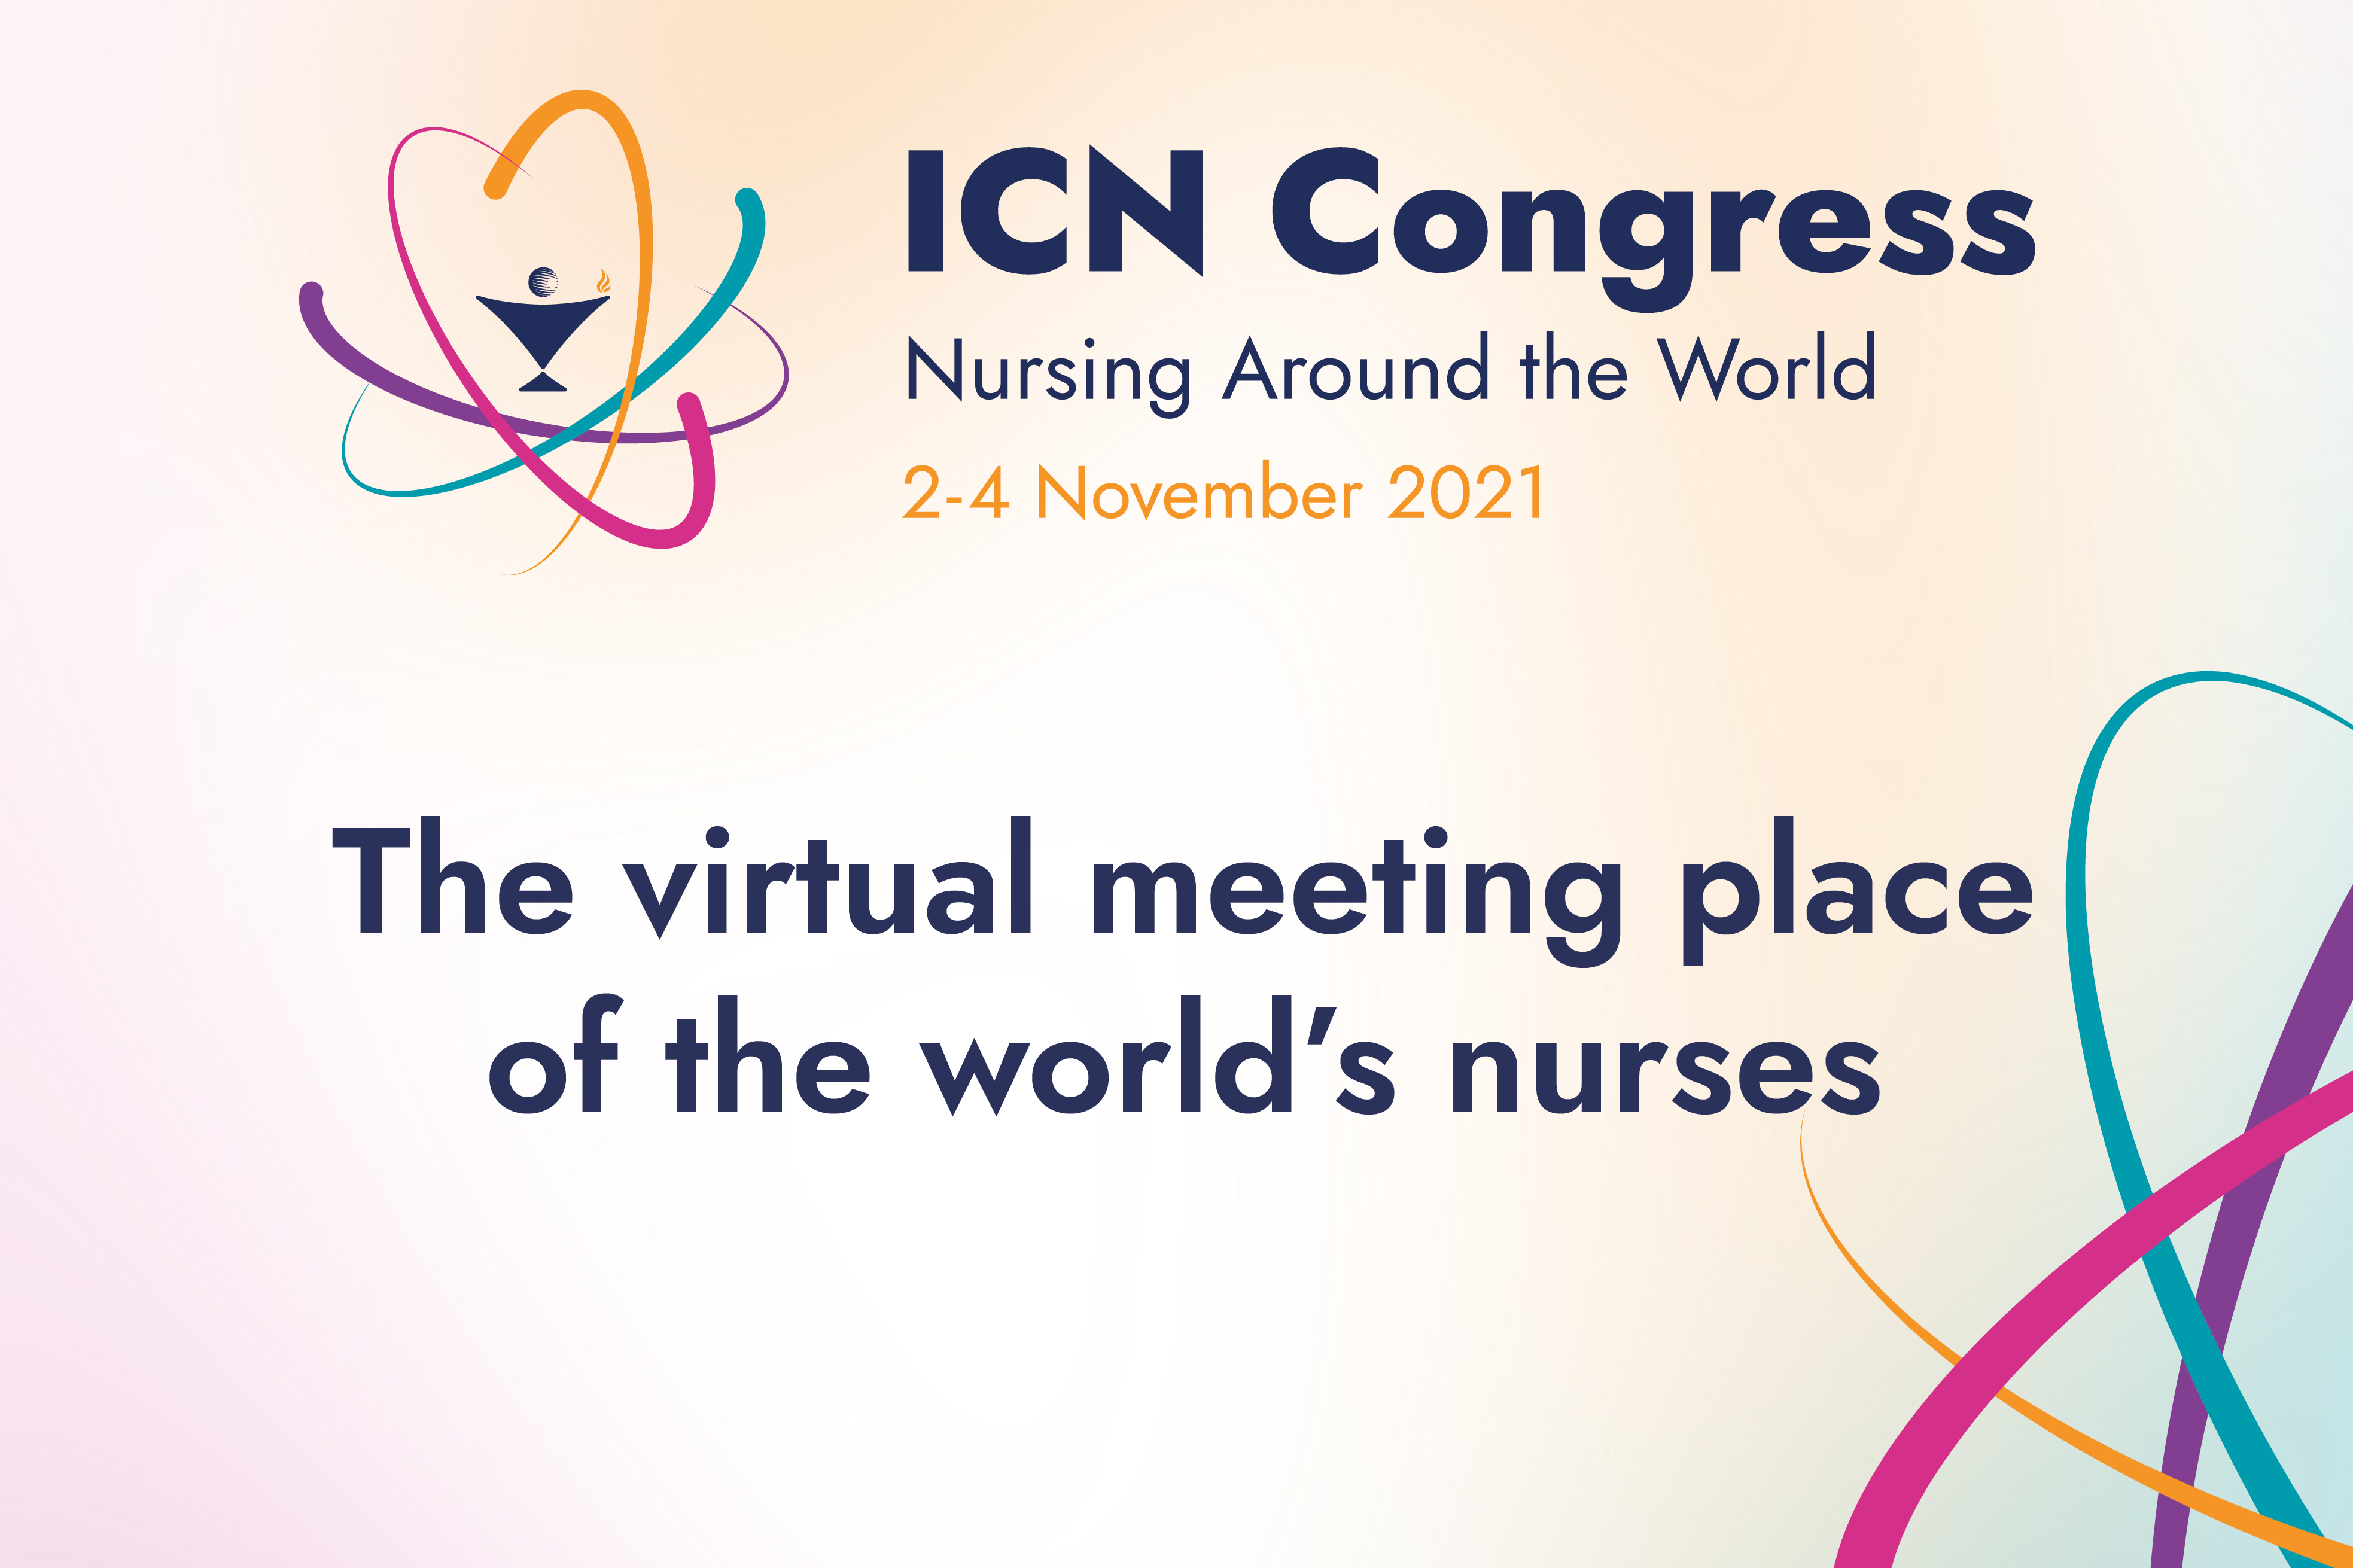 Access the ICN Congress website